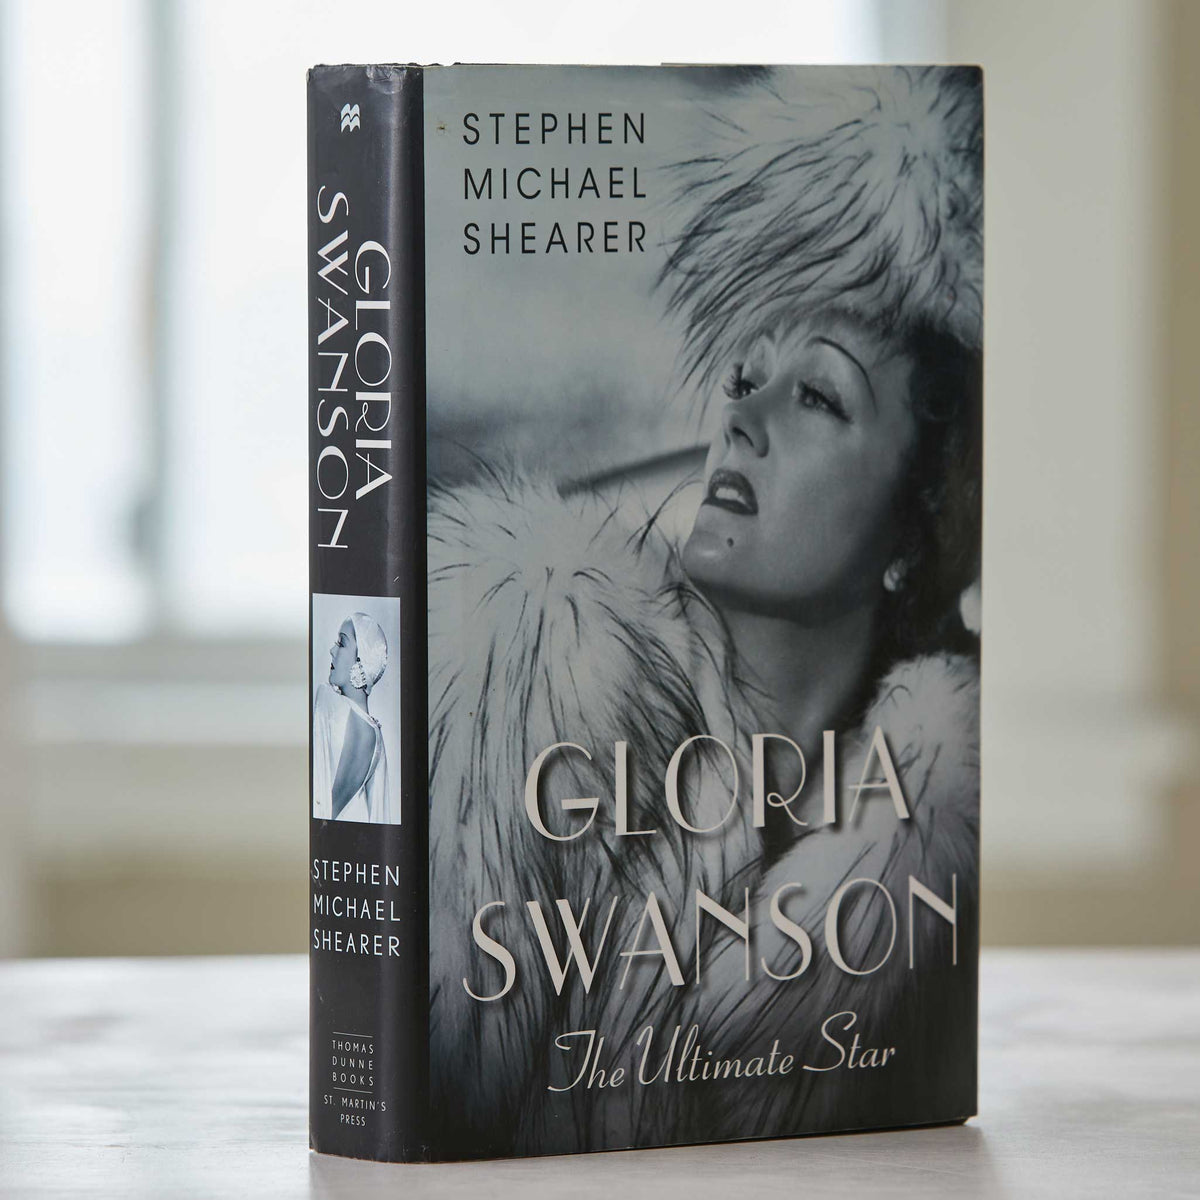 GLORIA SWANSON, THE ULTIMATE STAR